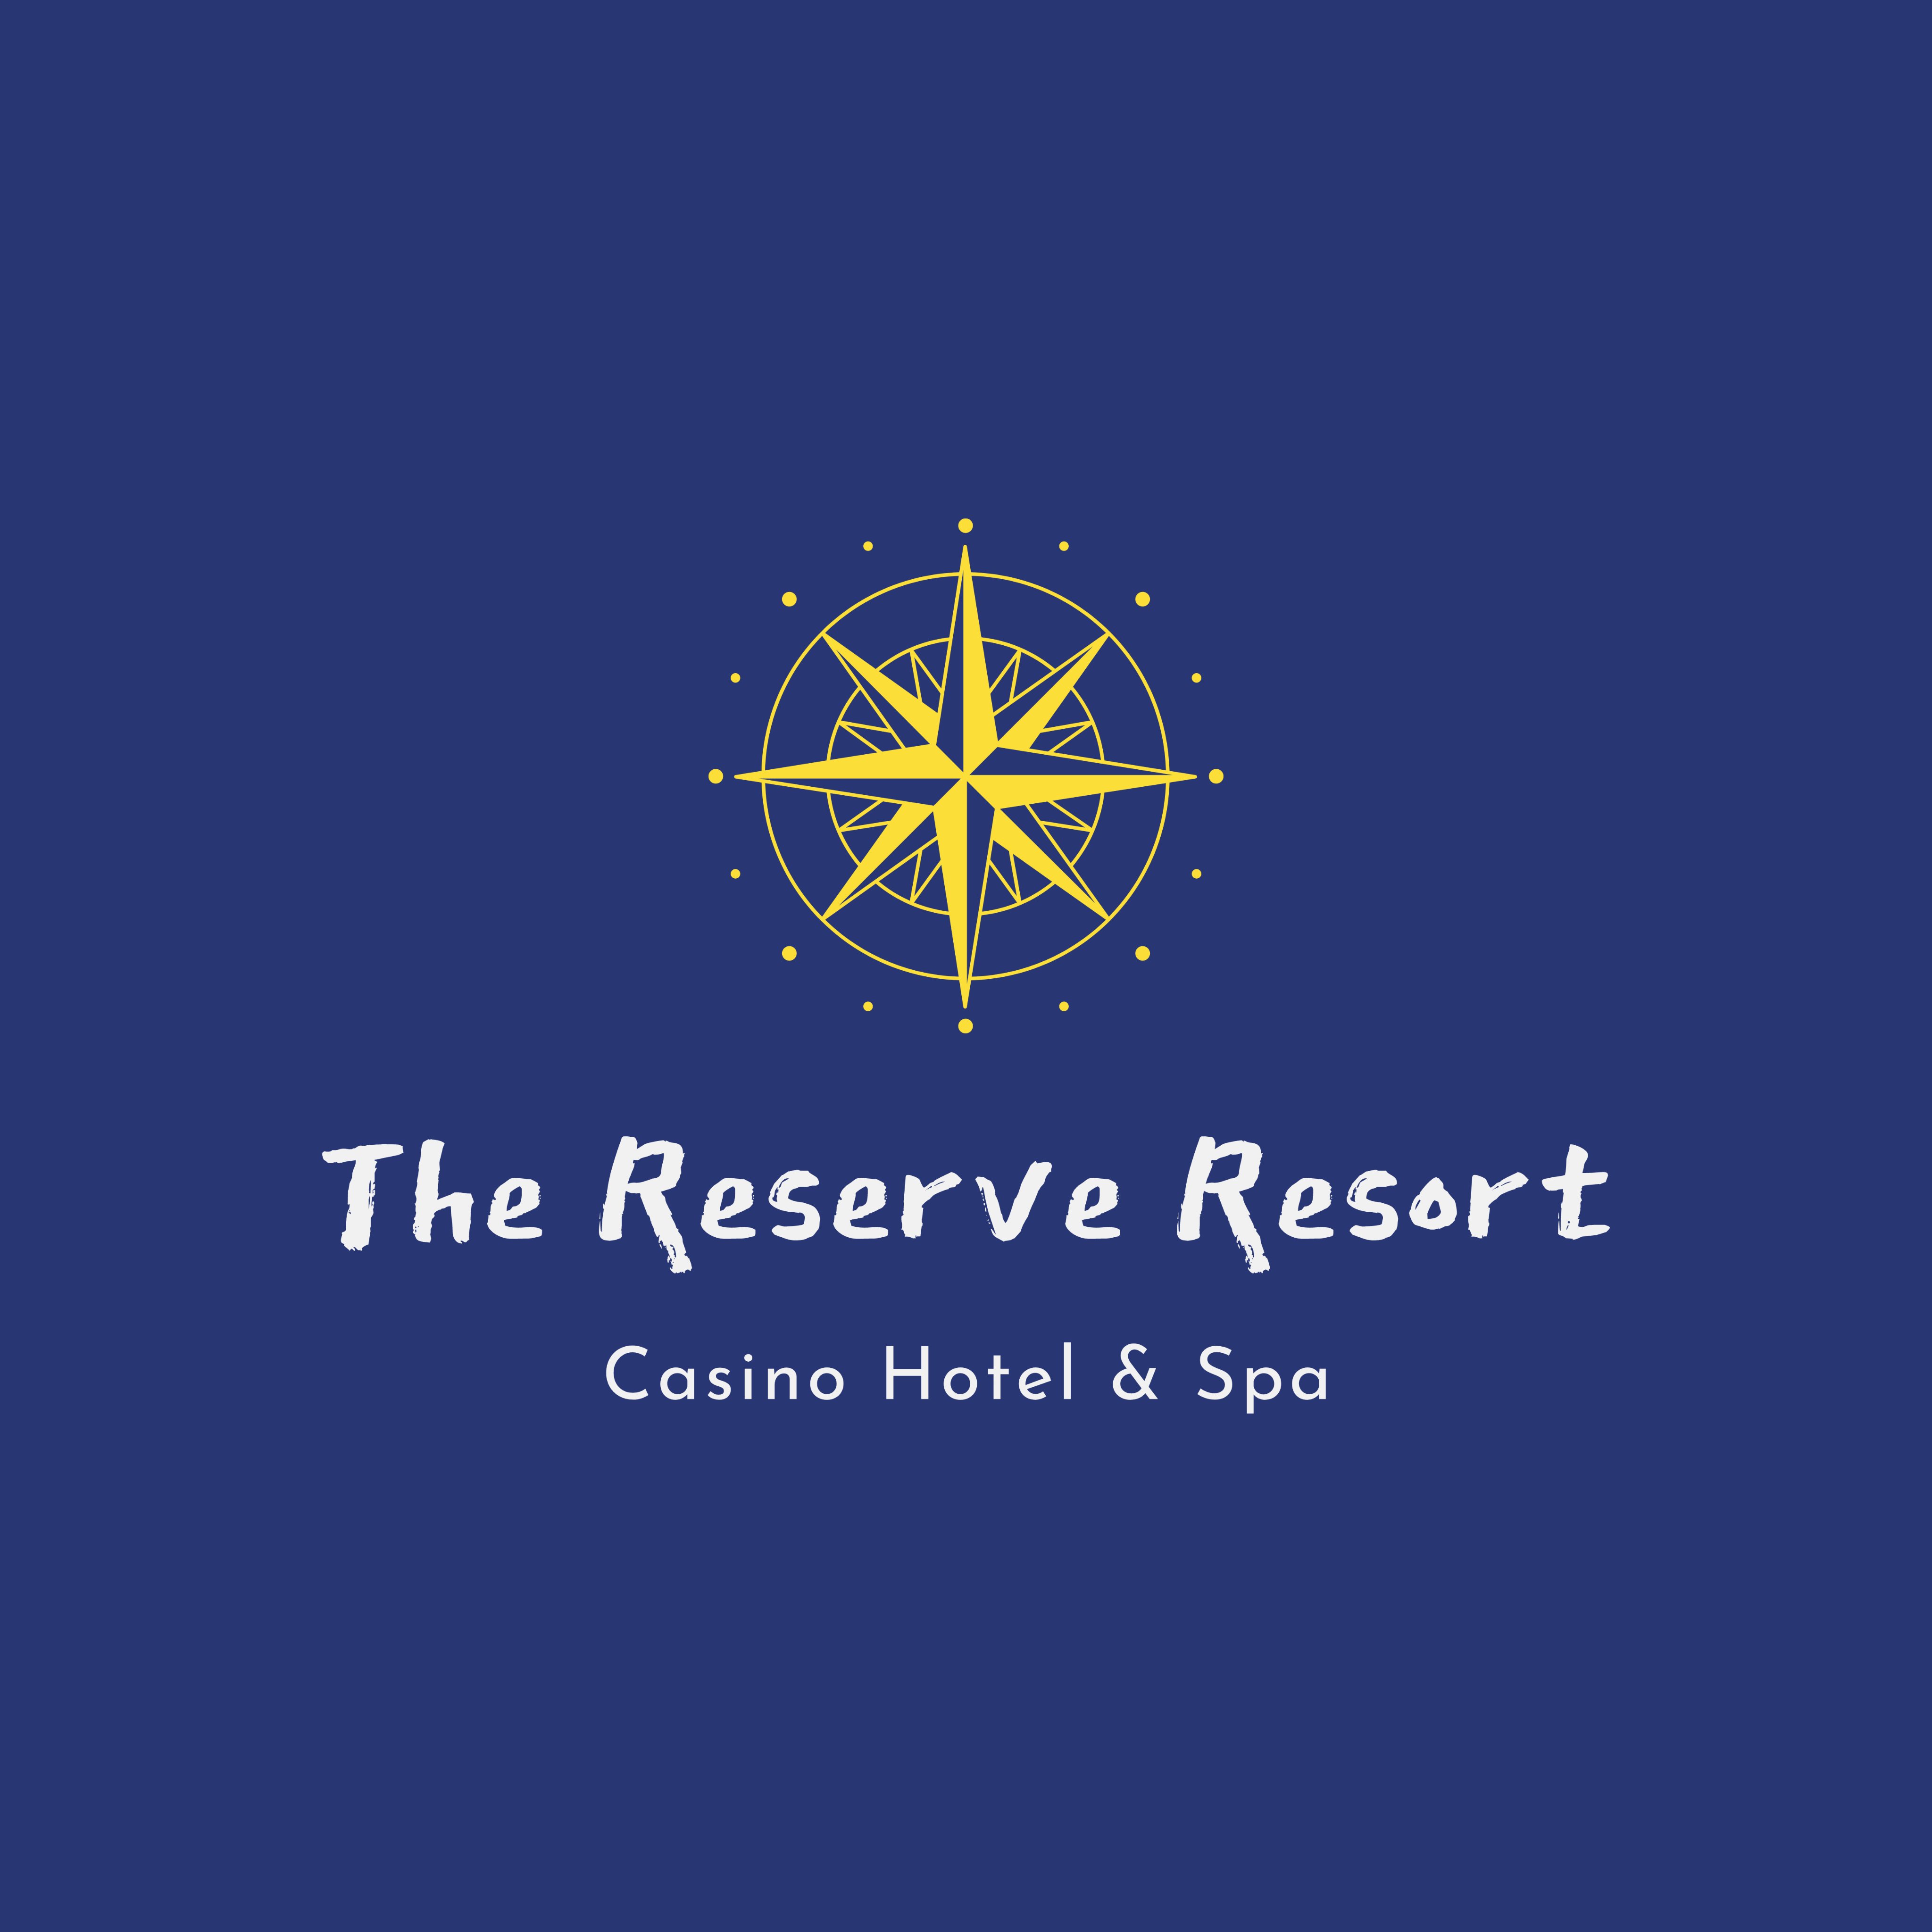 The Reserve Resort Casino Hotel & Spa